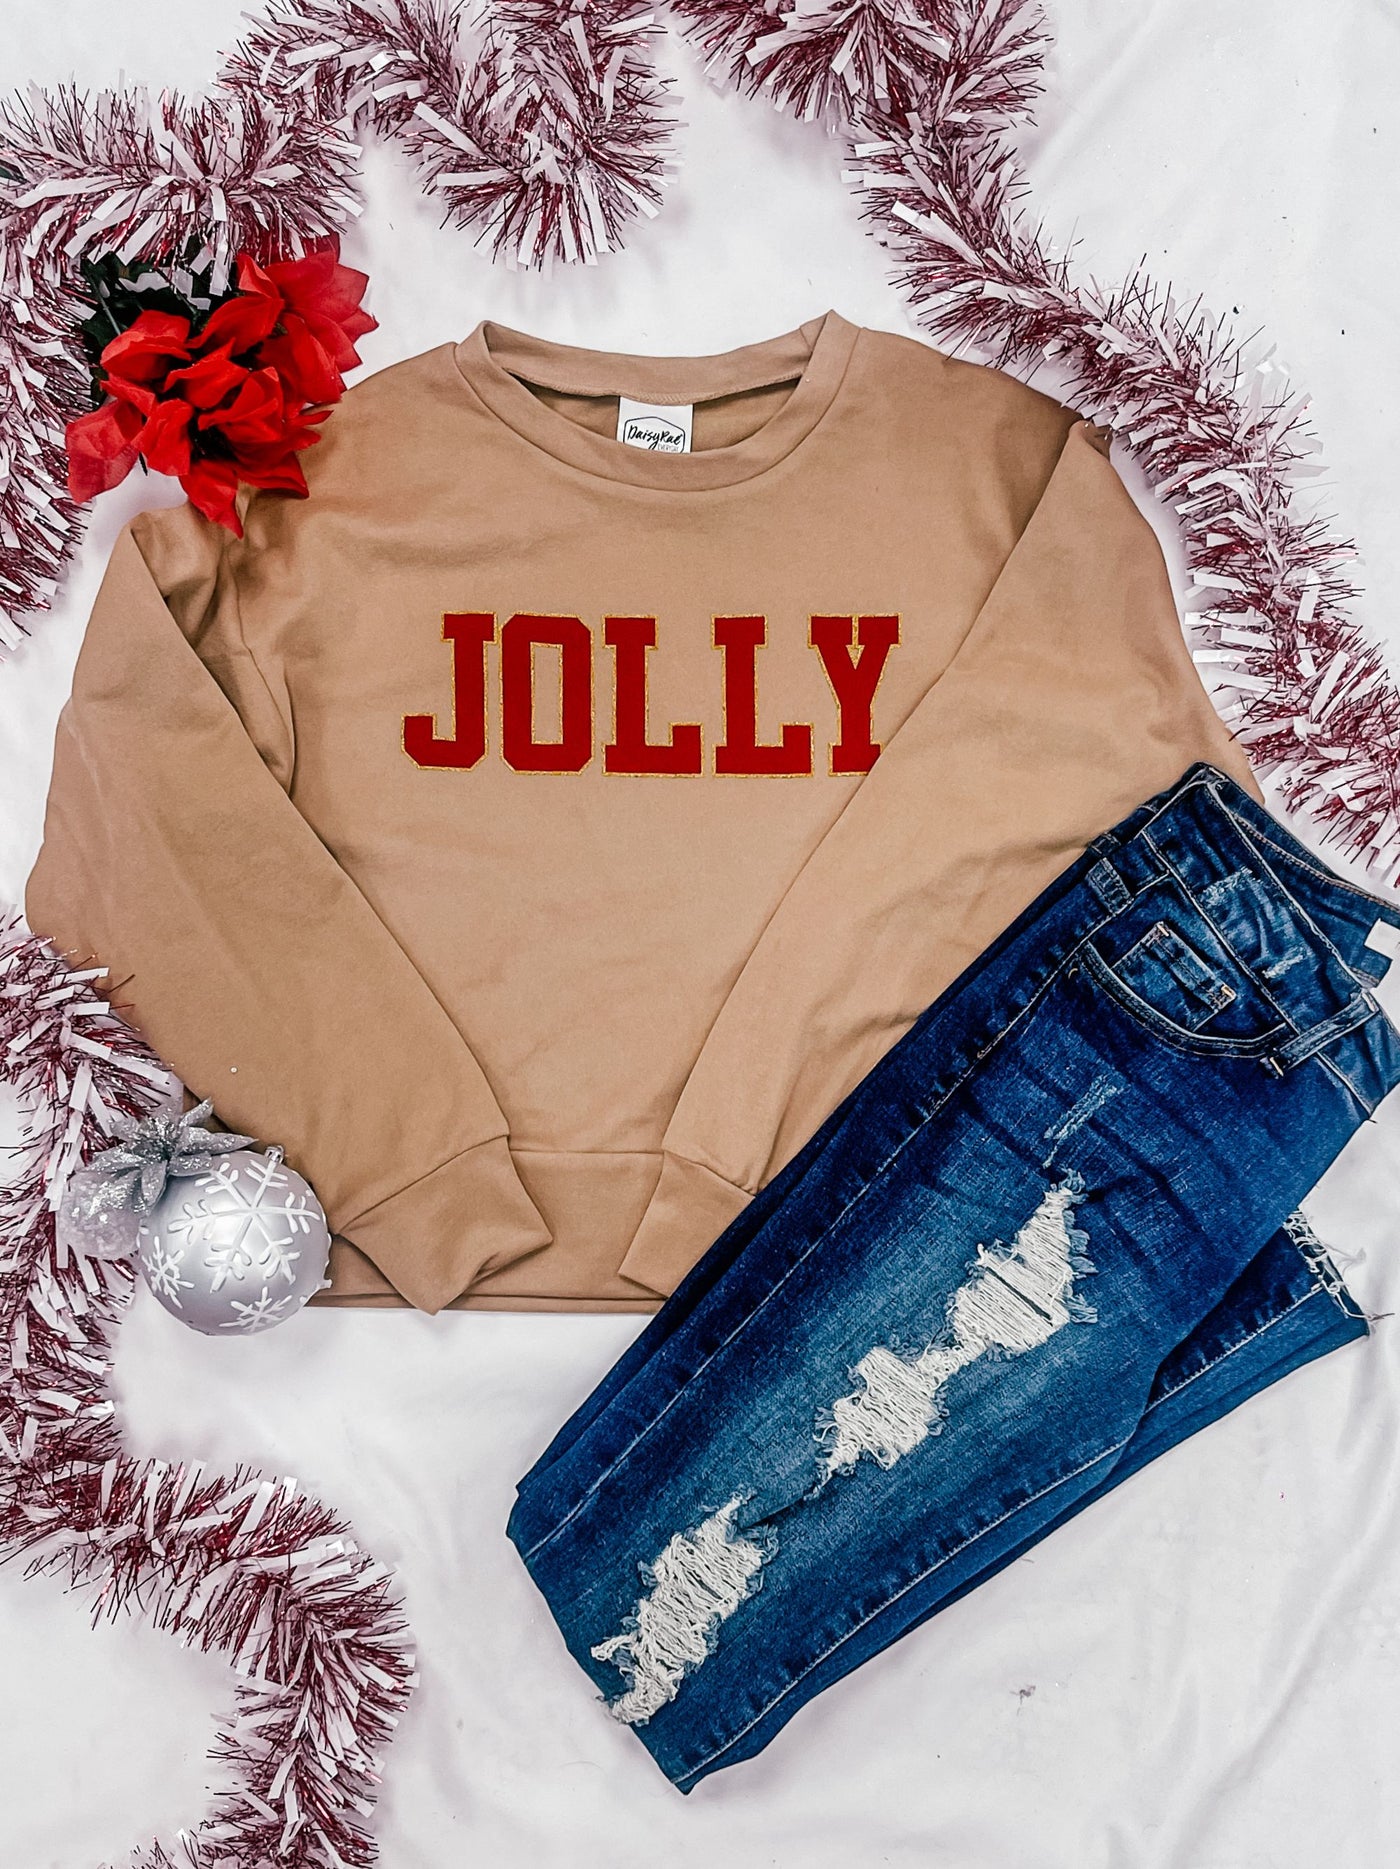 Jolly on Carmel Macchiato Tan Cropped Sweatshirt